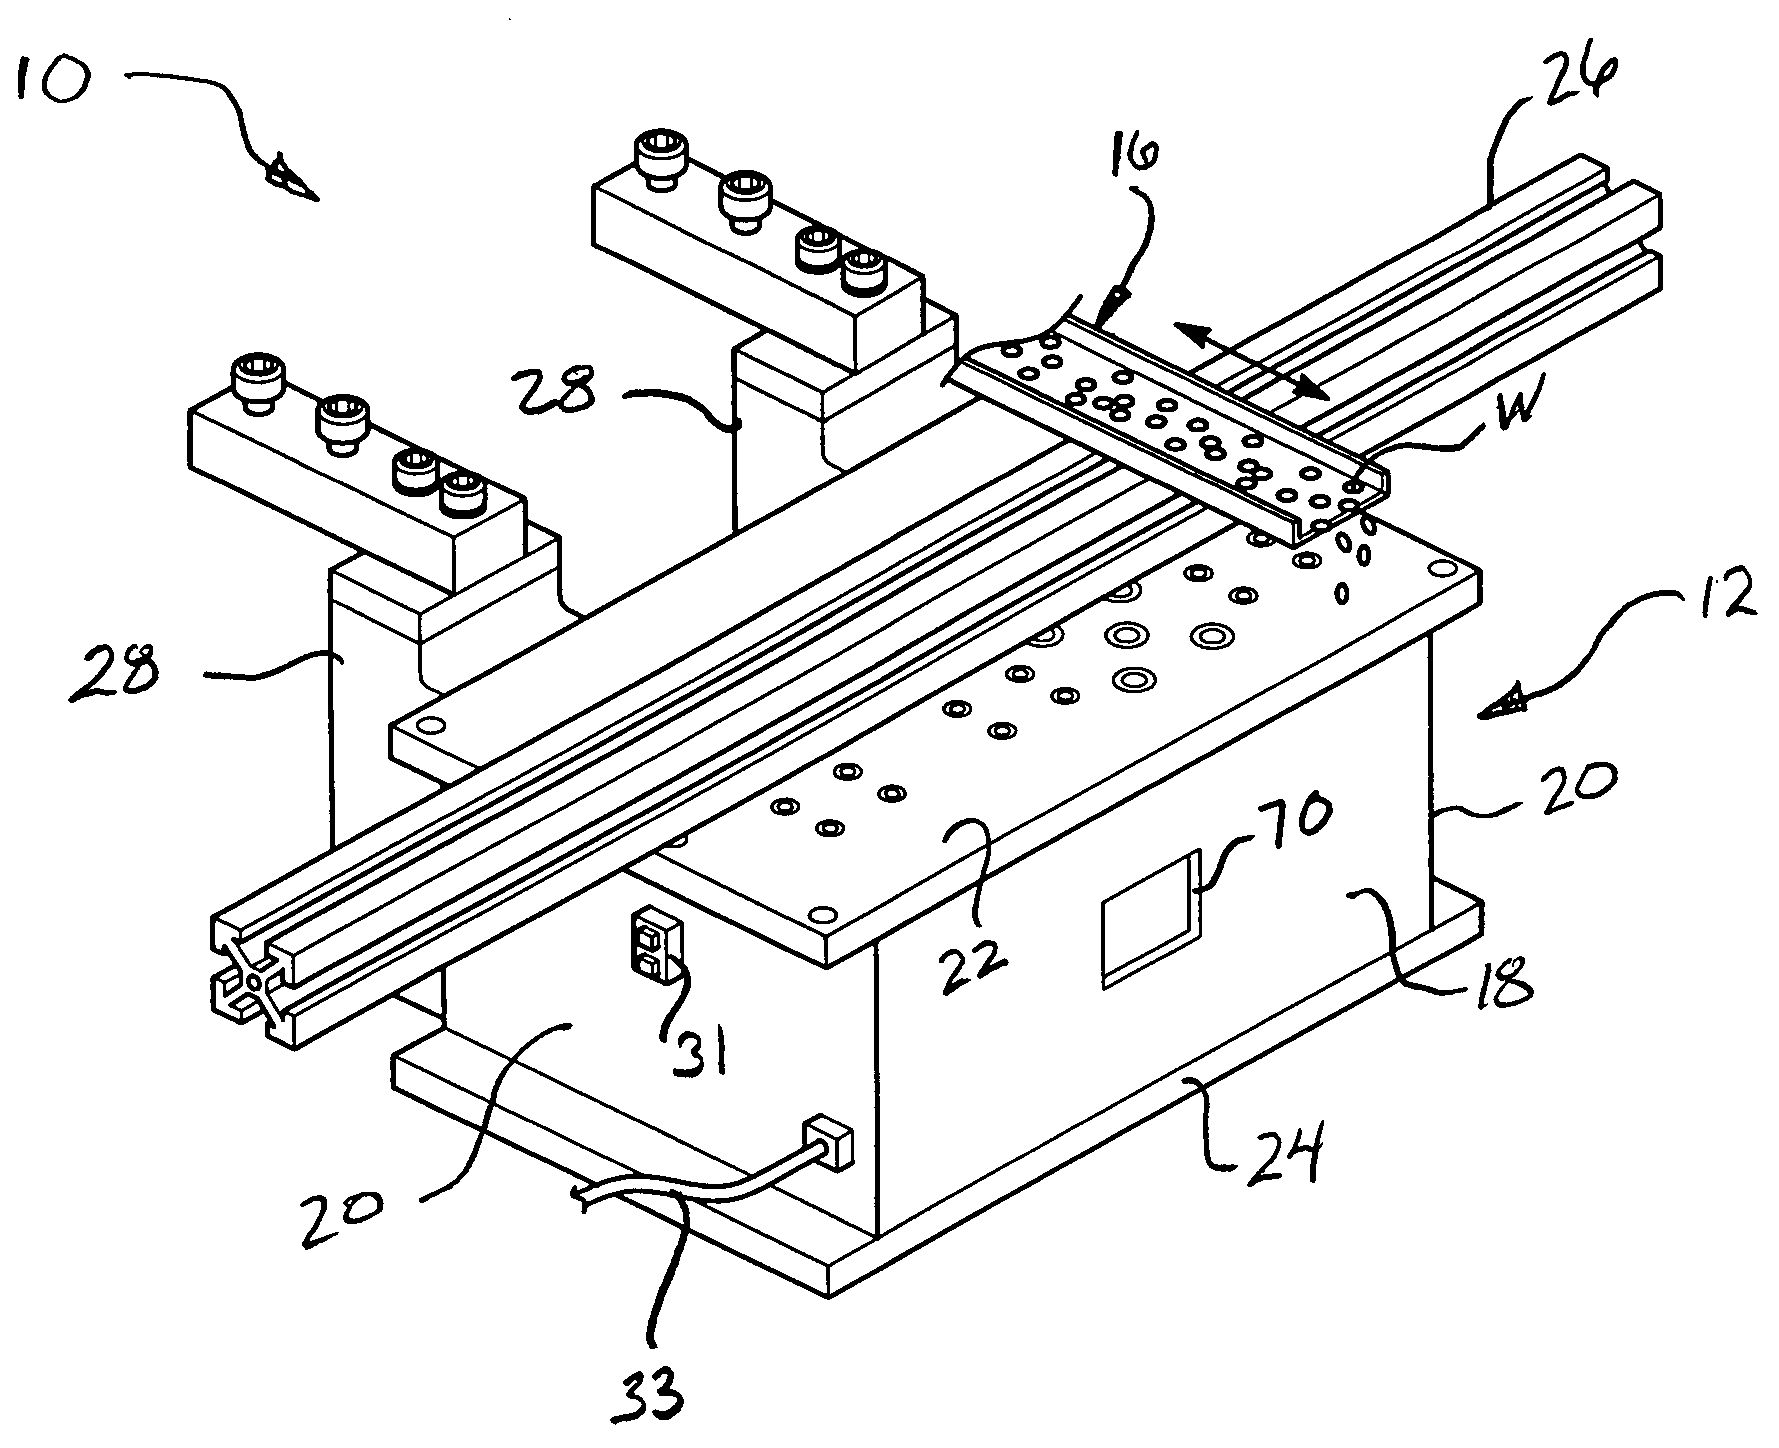 Electric shaker conveyor assembly